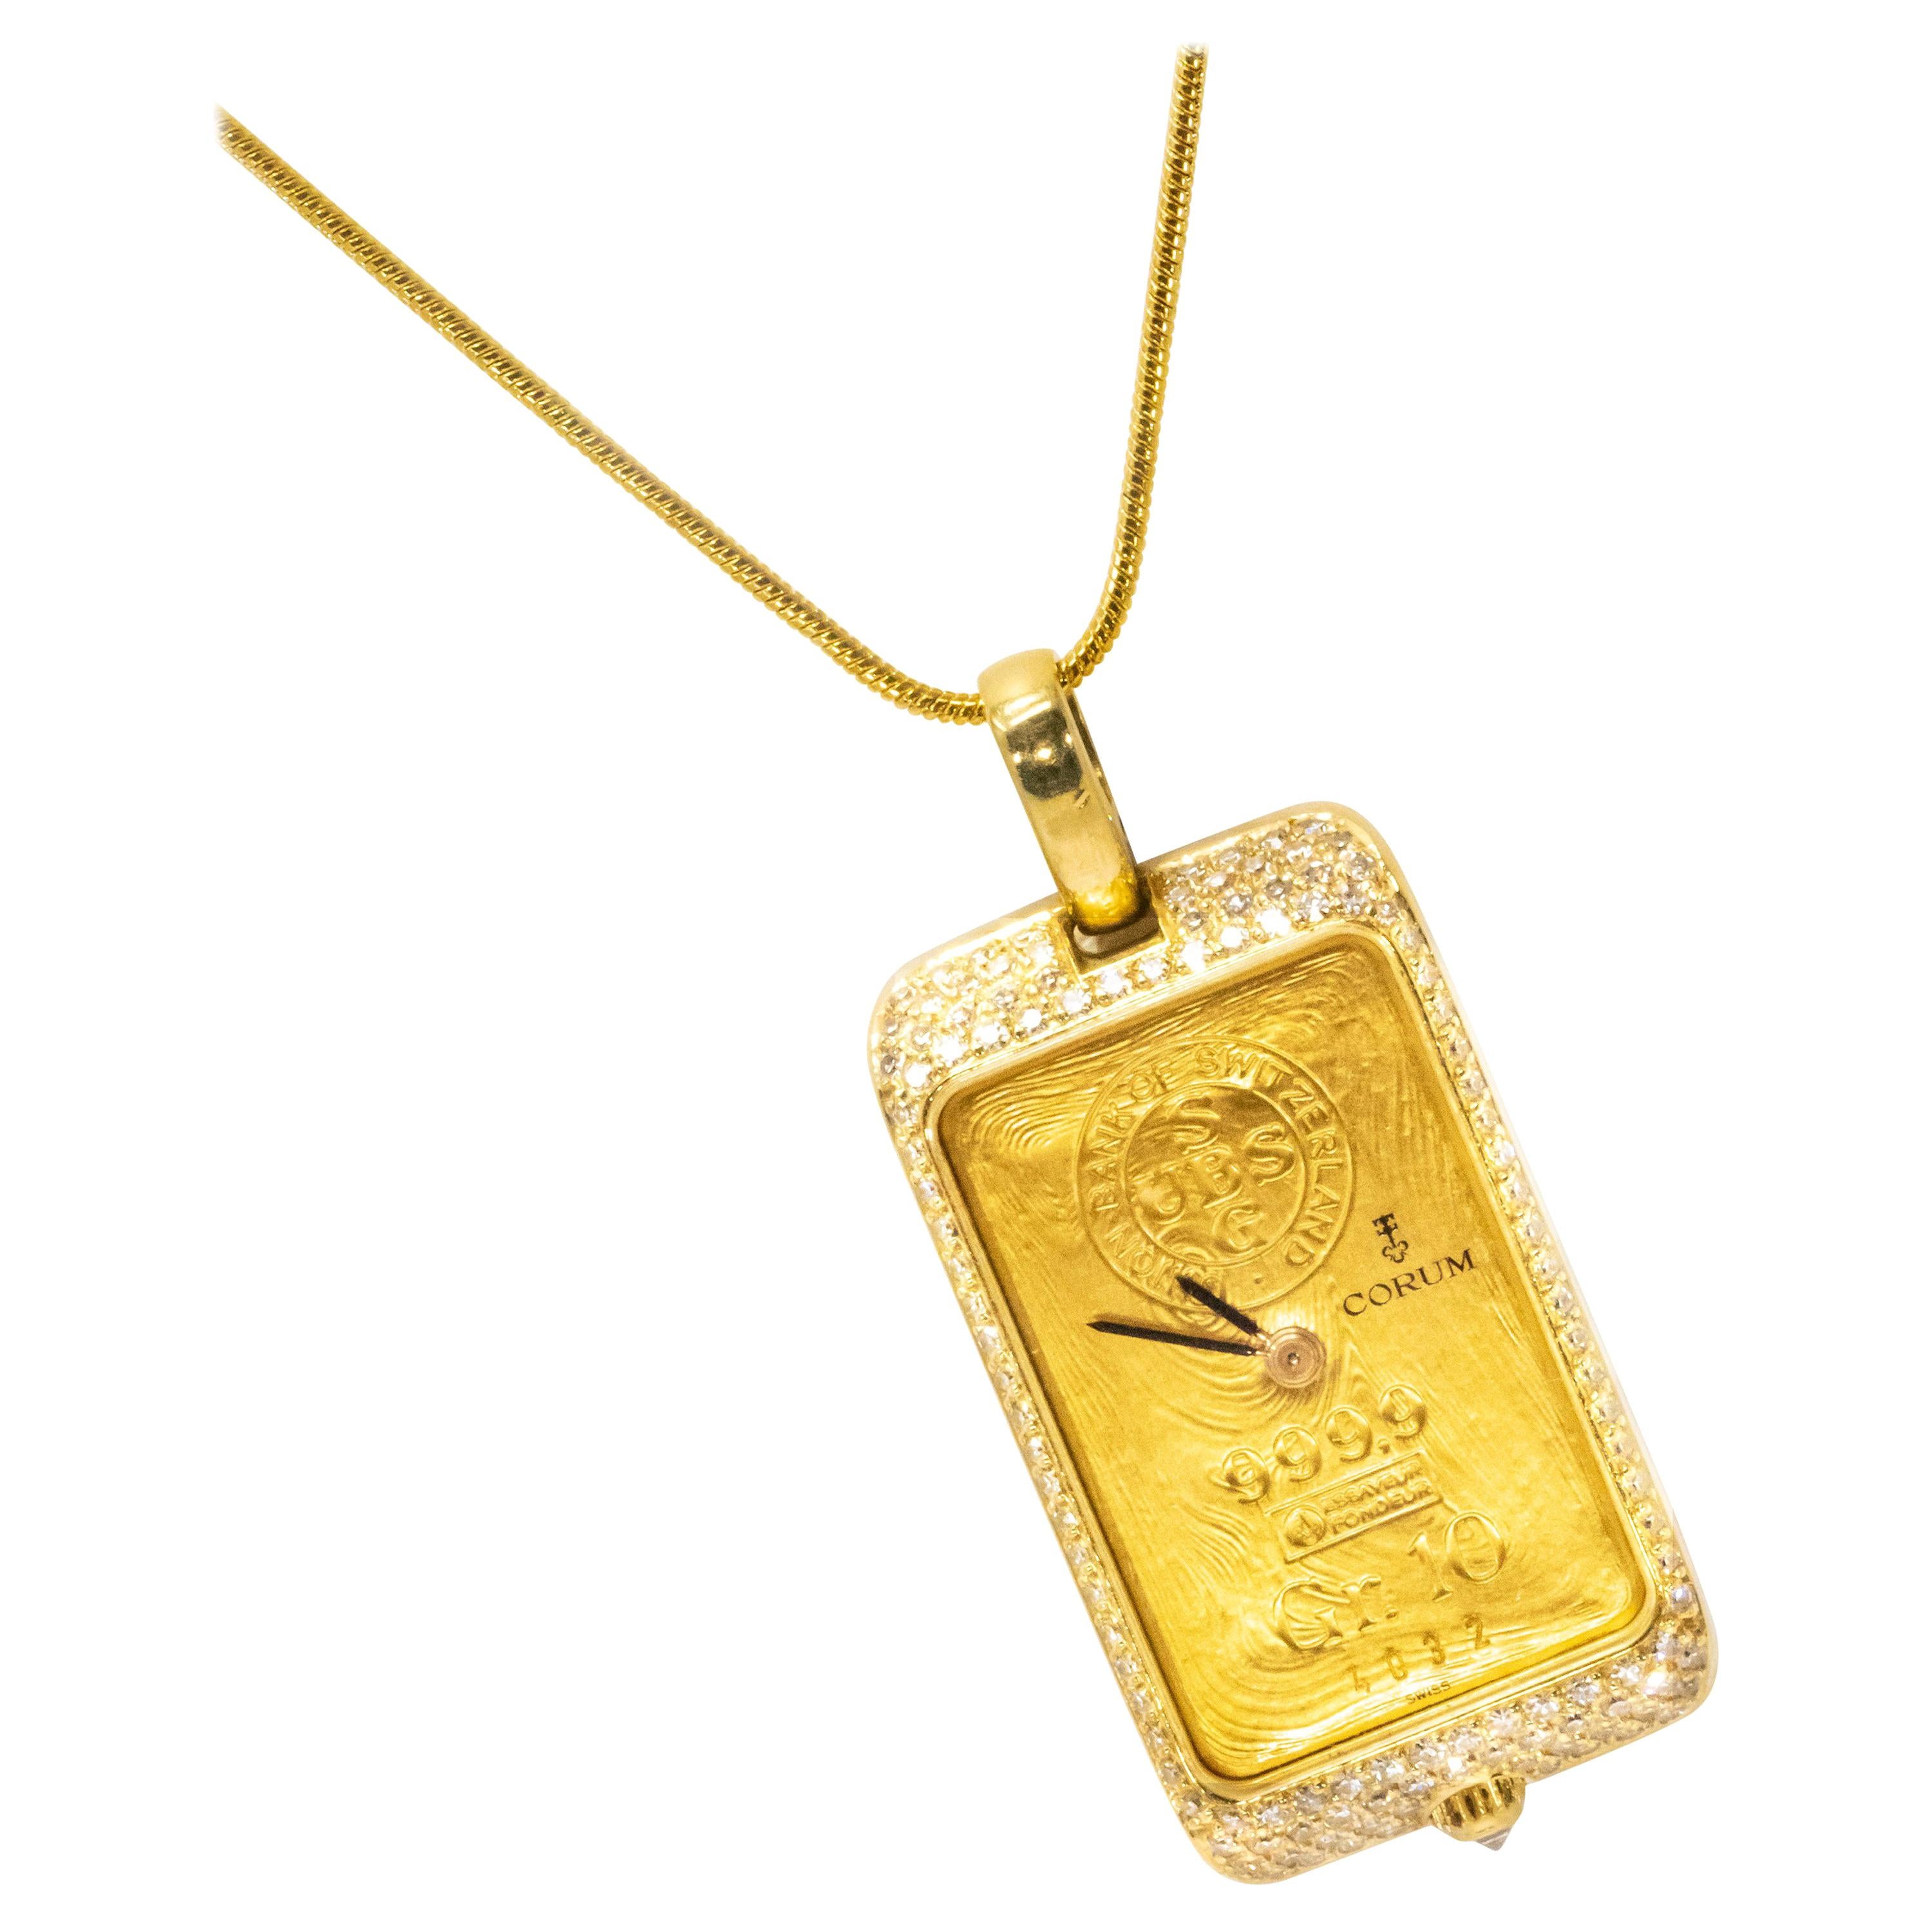 Rare 1980s Corum Ingot "Ubs 24Kt 10gram Gold Bar" Motif Diamond Pendant Watch